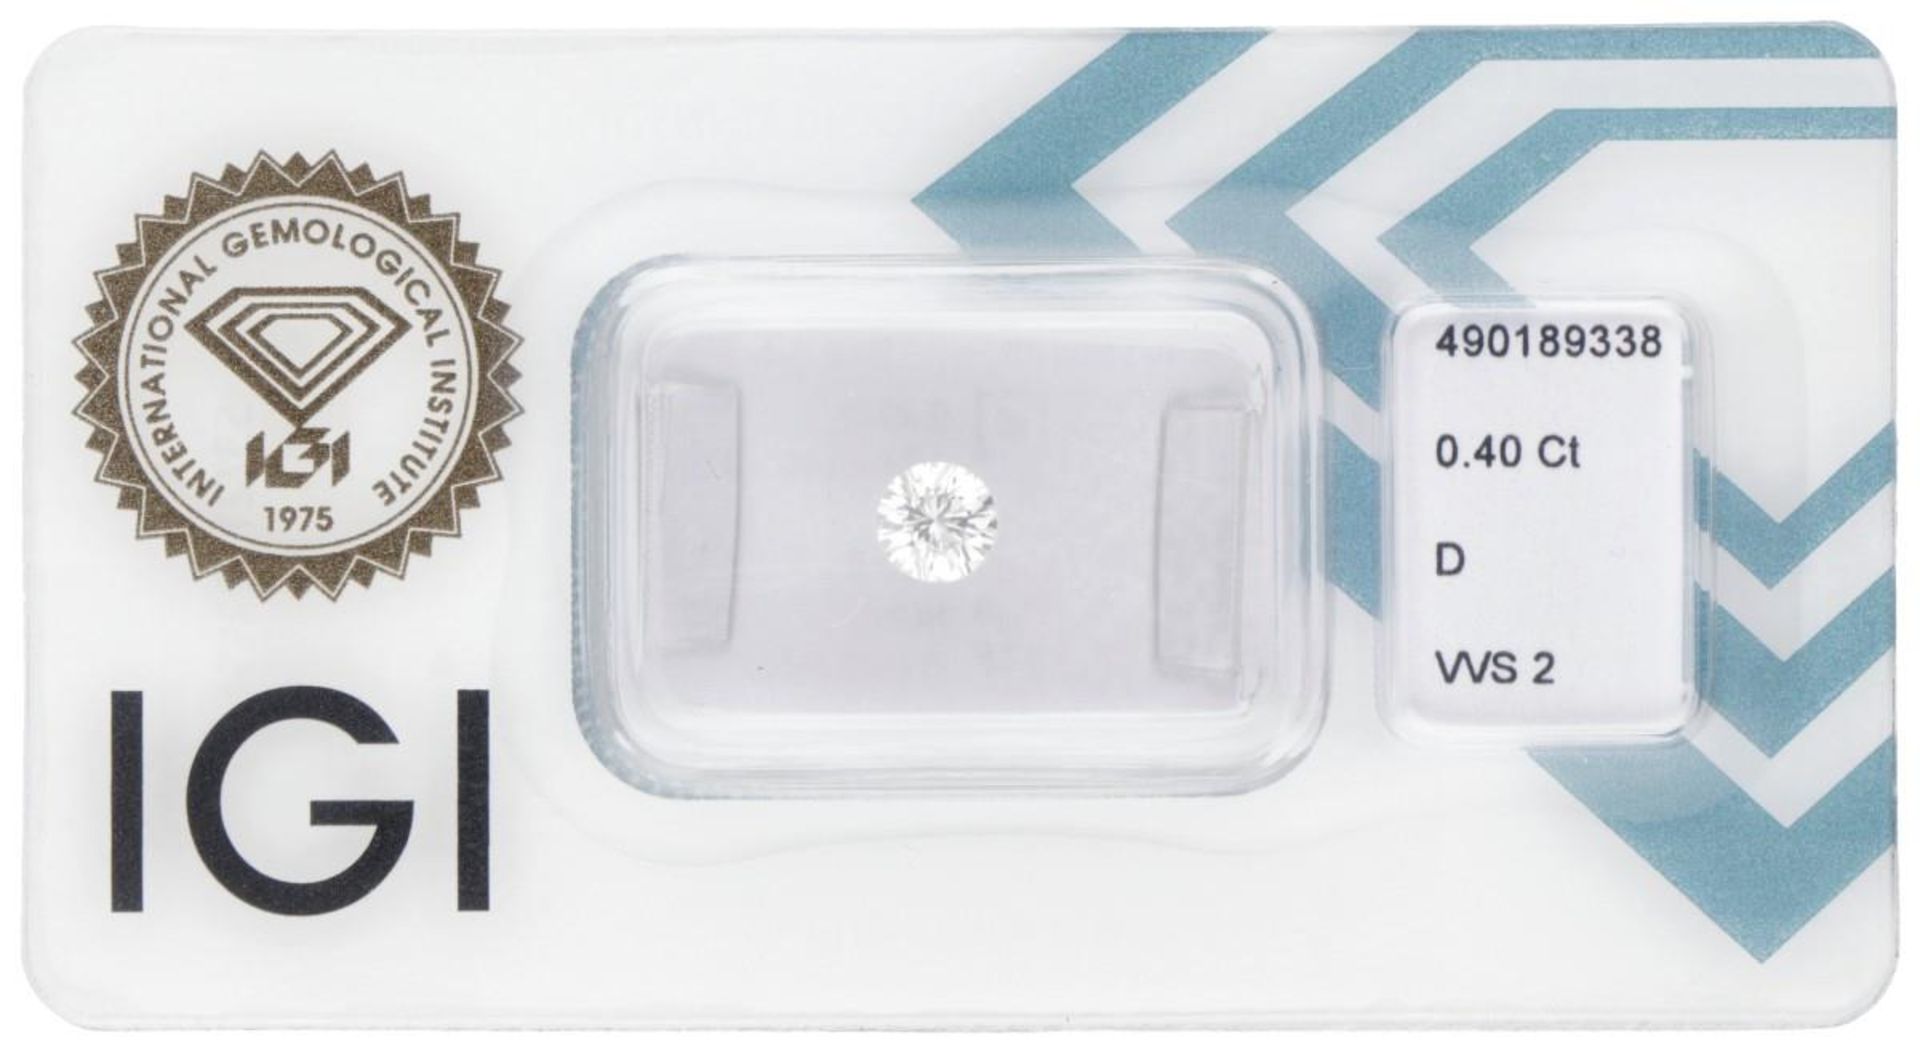 IGI certified brilliant cut natural diamond of 0.40 ct.